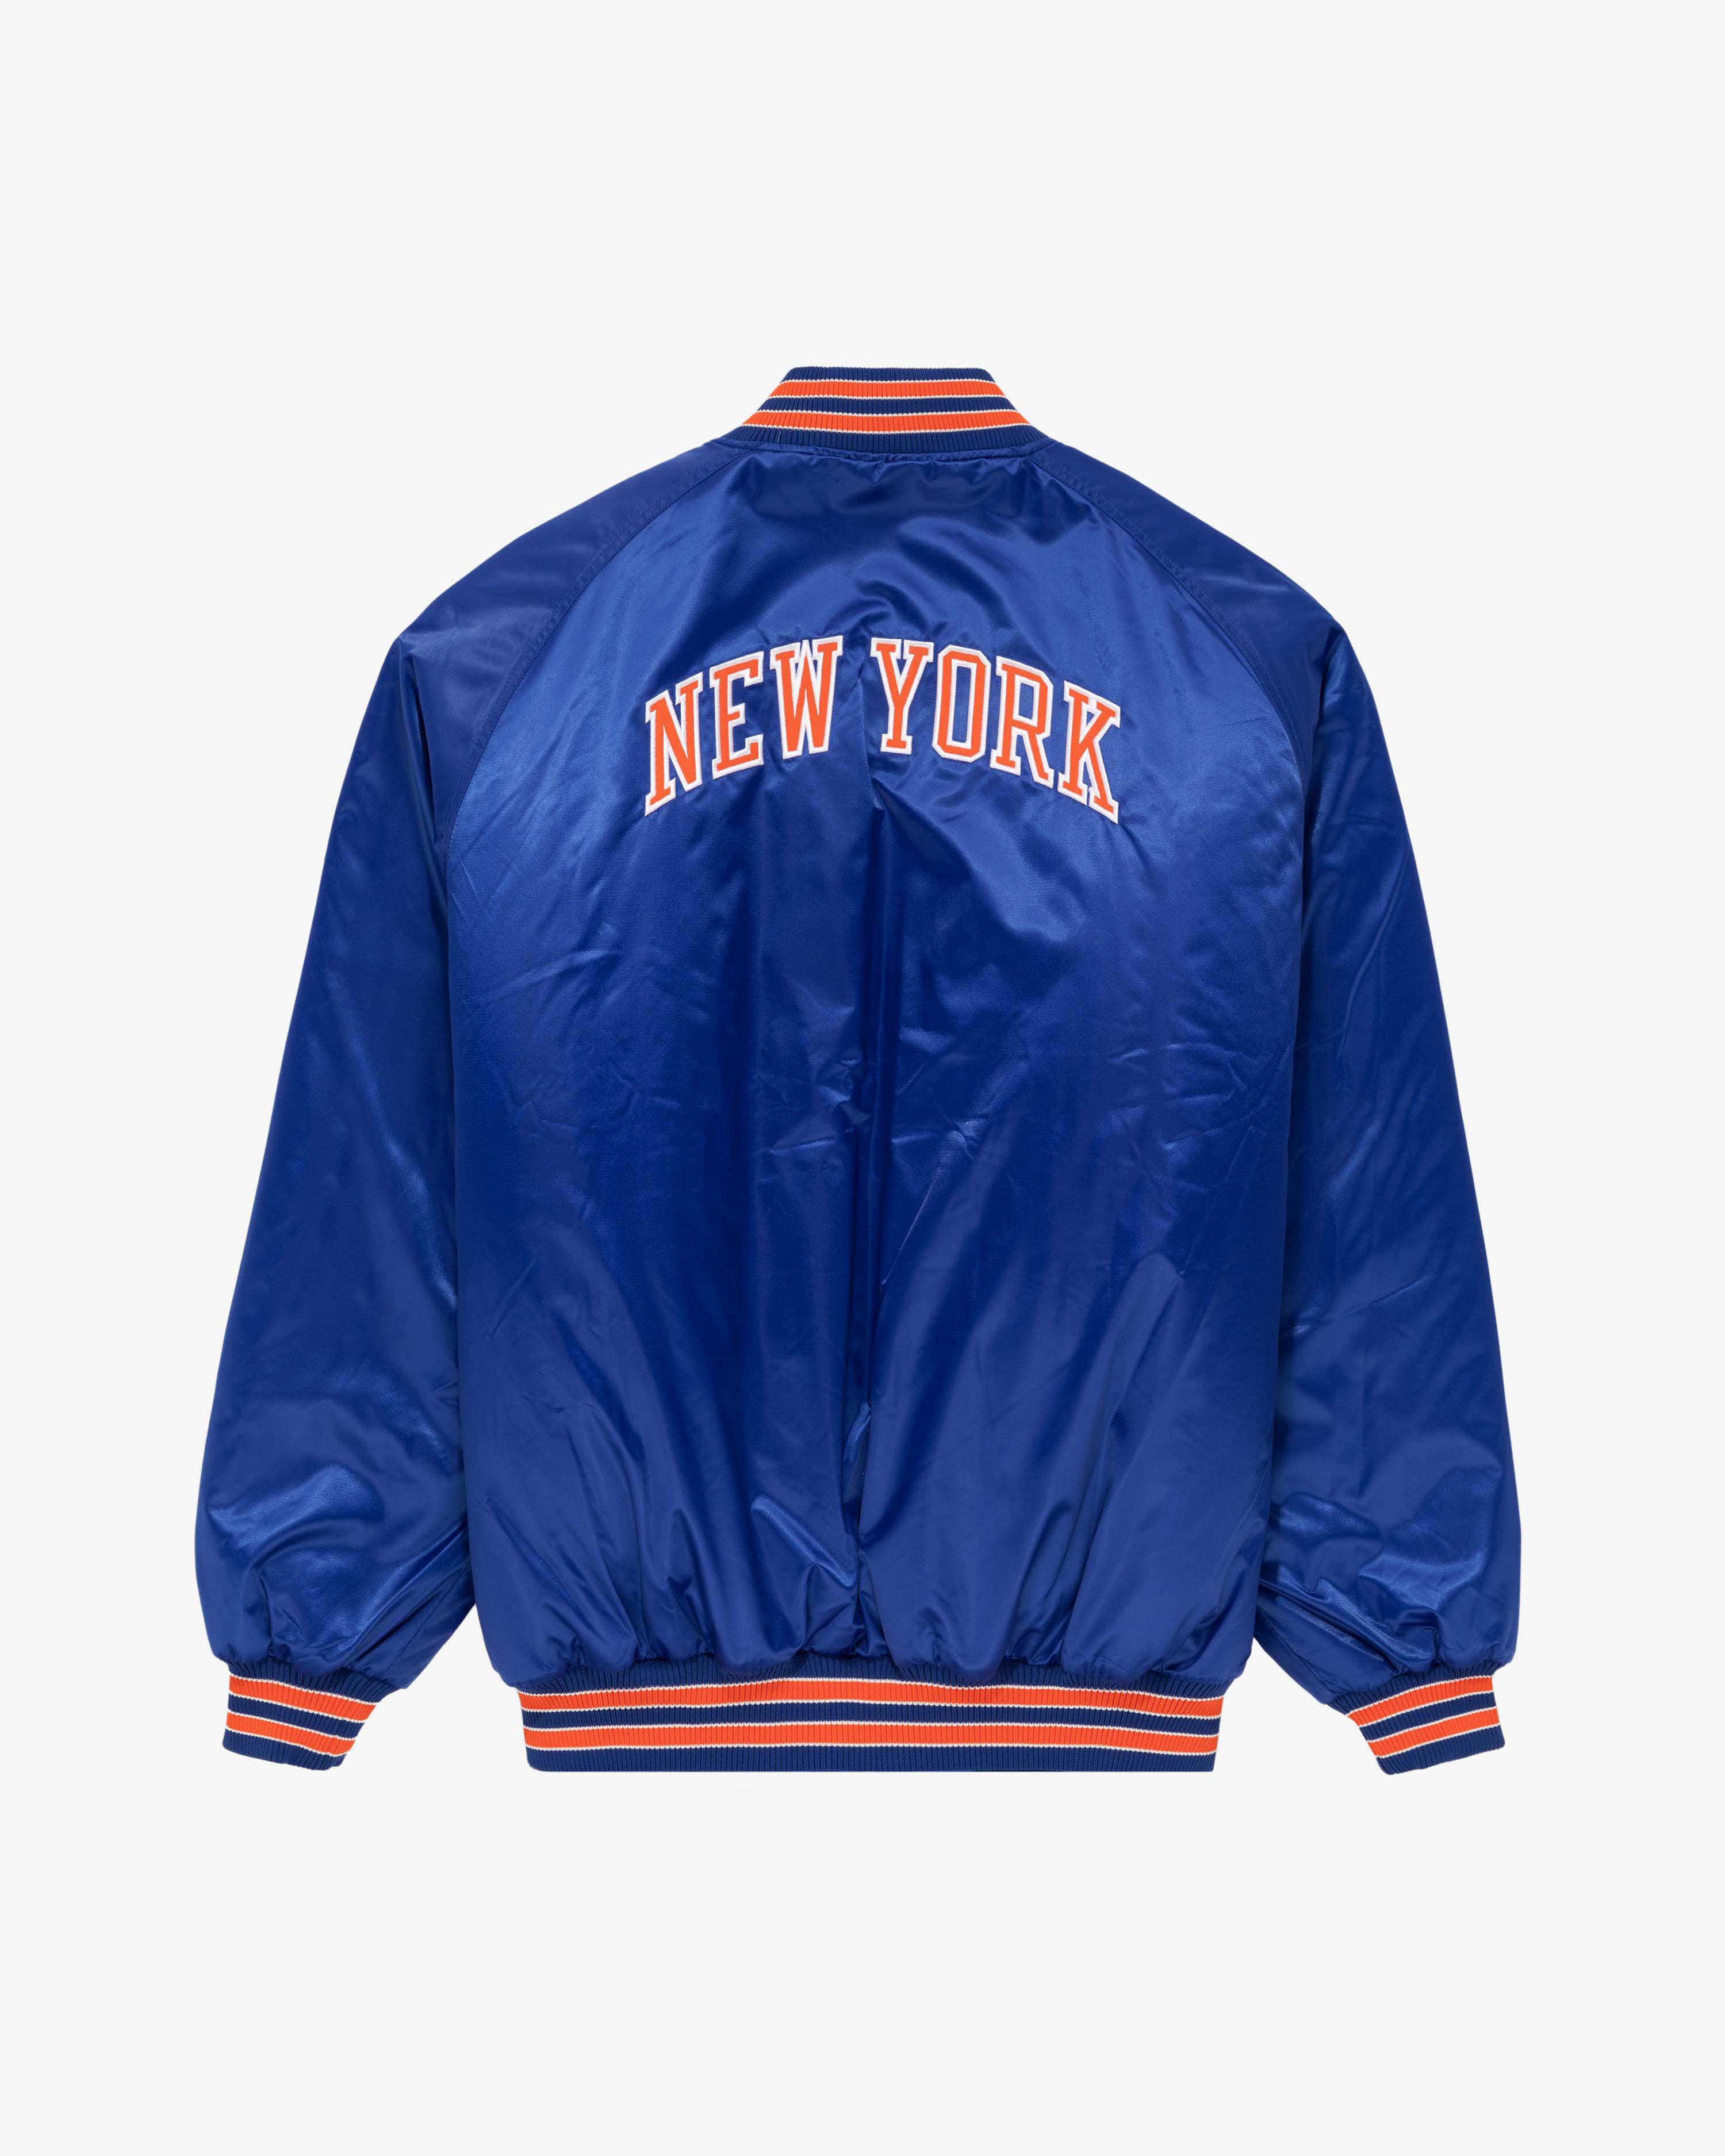 New York Knicks White Satin Jacket - Buy Now